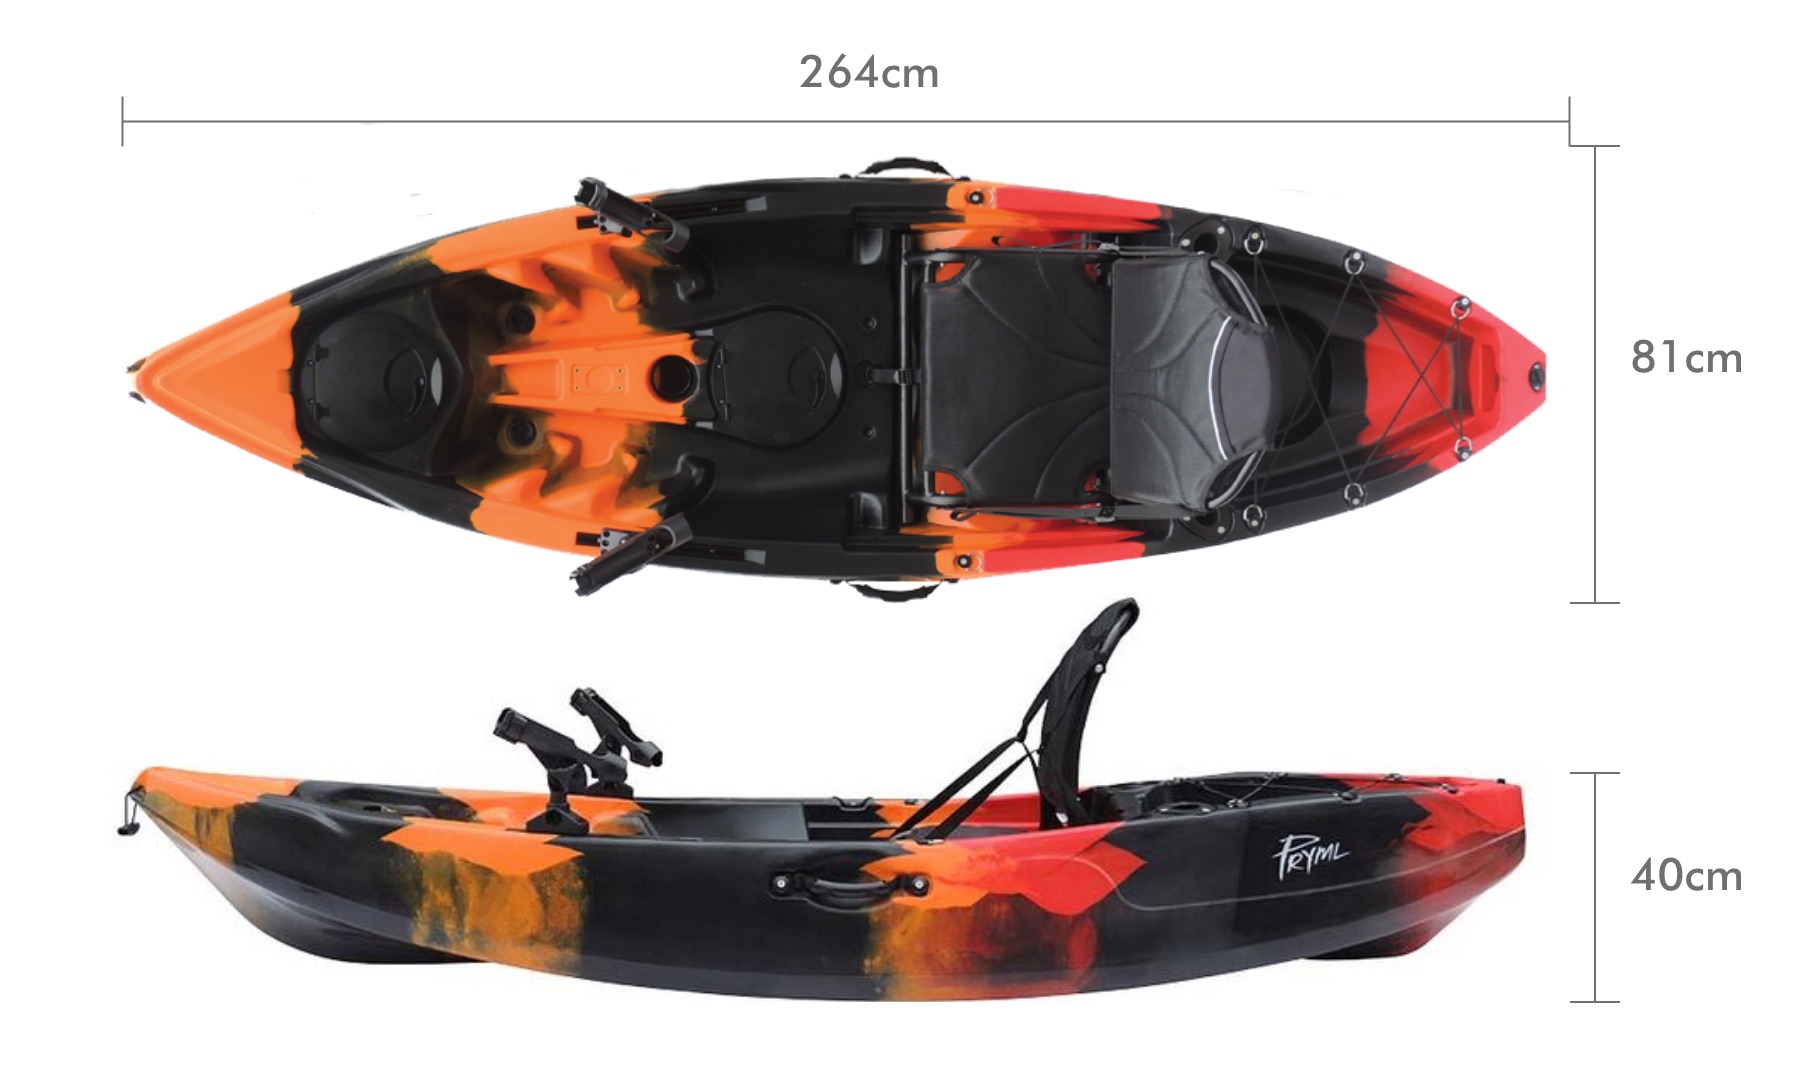 Pryml Legend Fishing Kayak Pack | L264 x W81 x H40cm